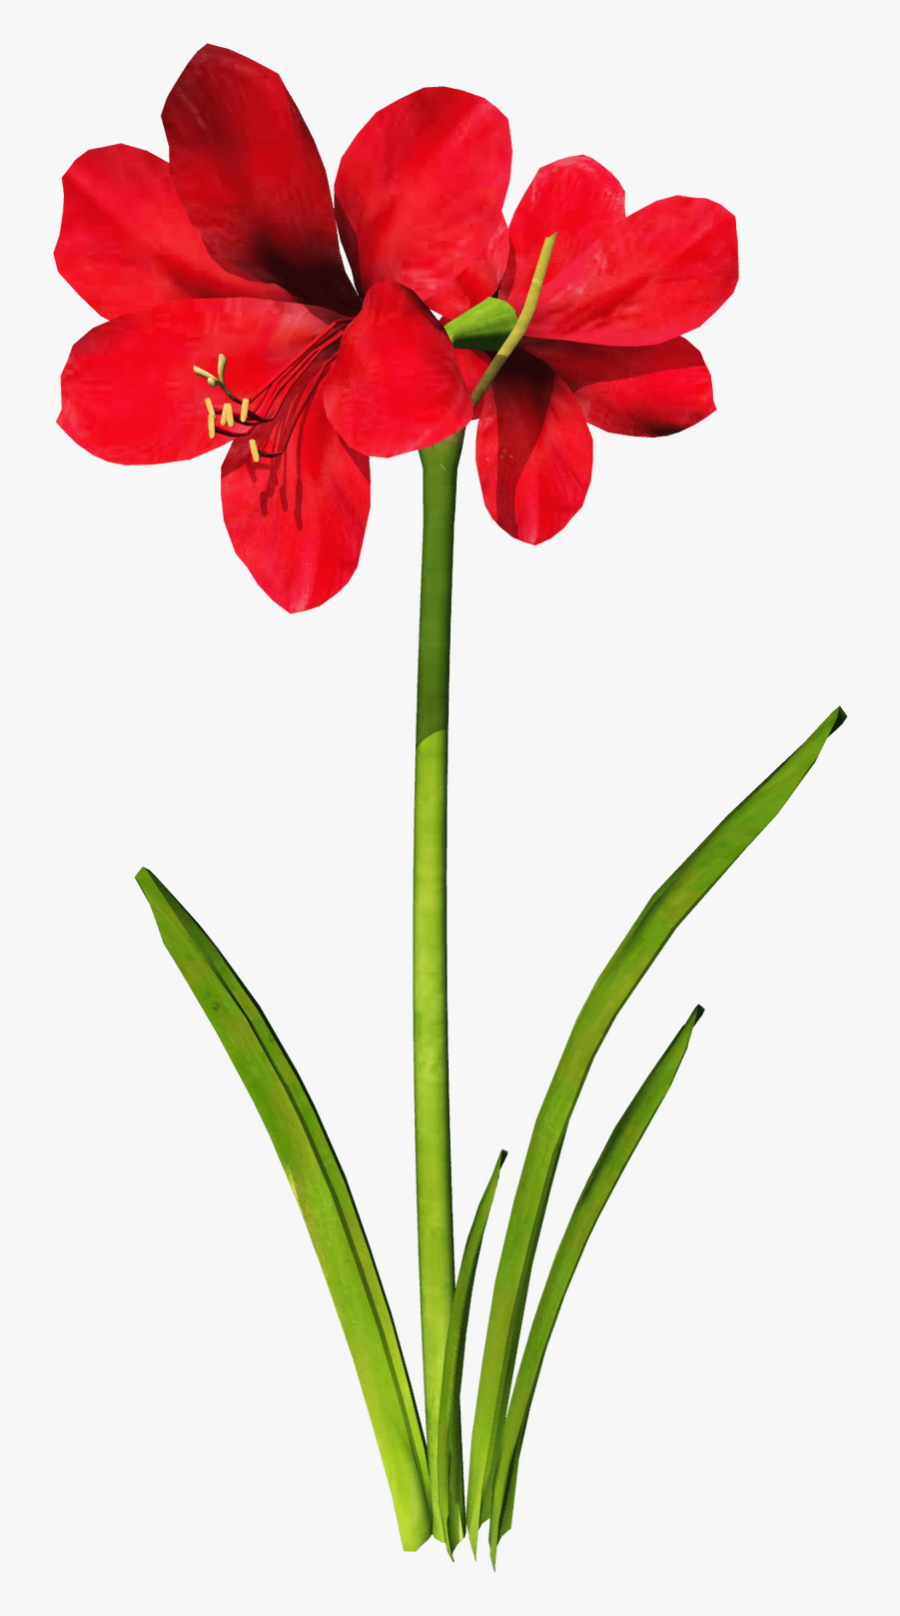 Amaryllis Flower Png, Transparent Clipart